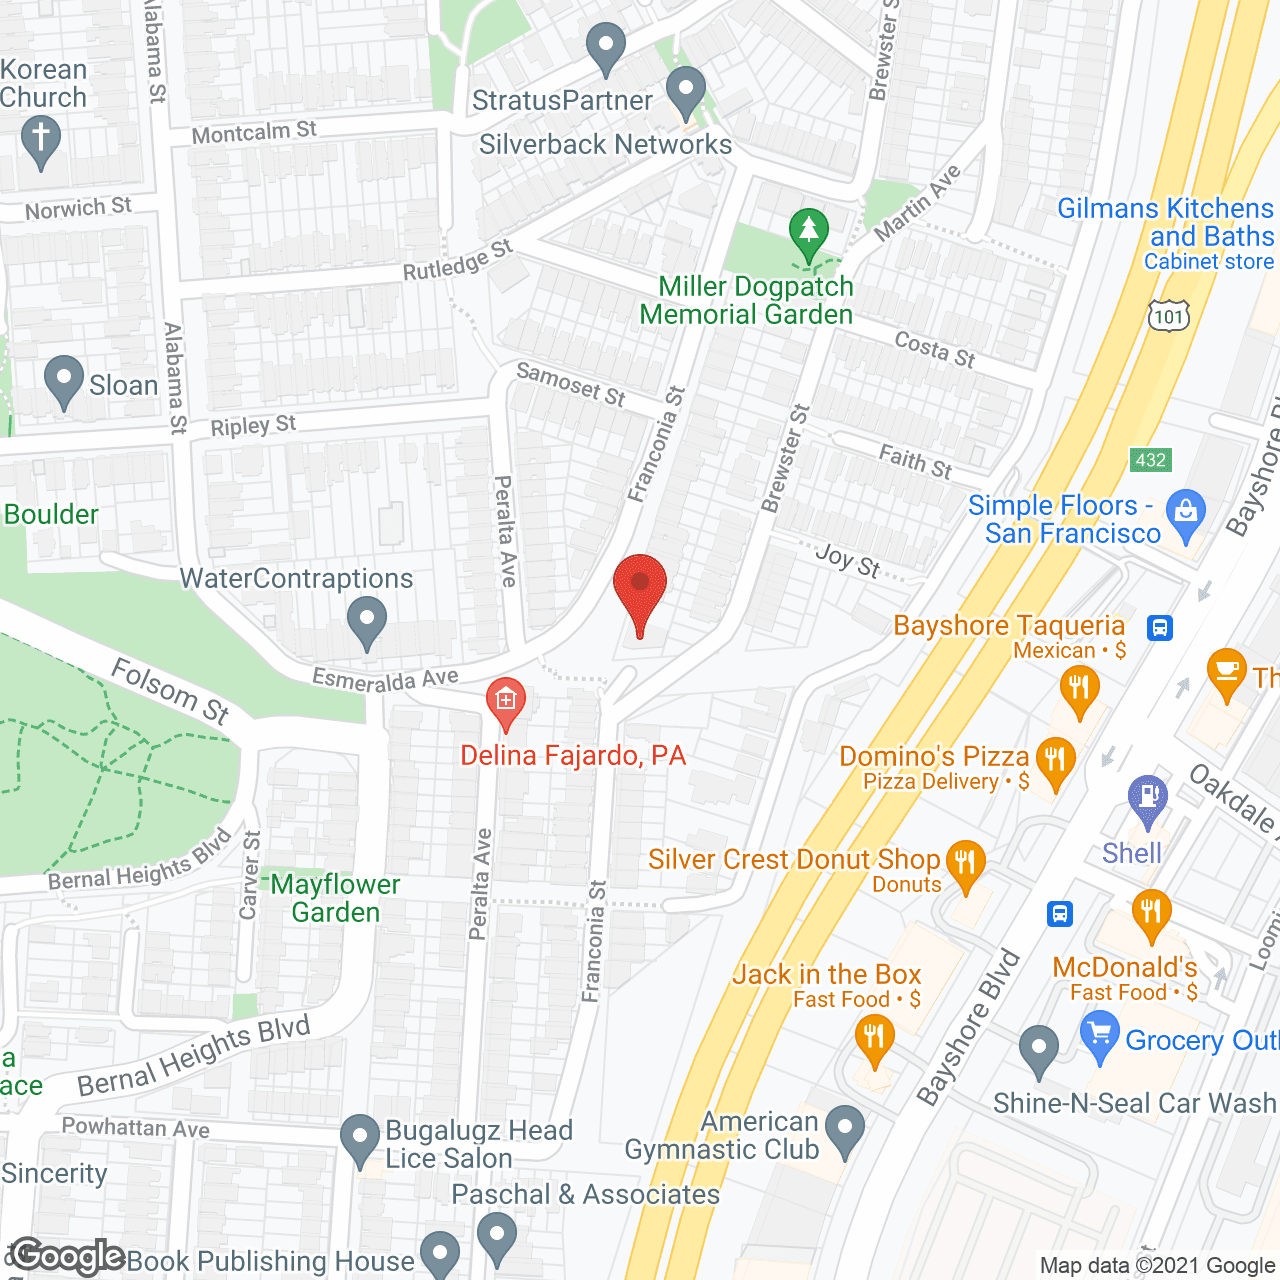 Bernal Heights Retirement Home in google map